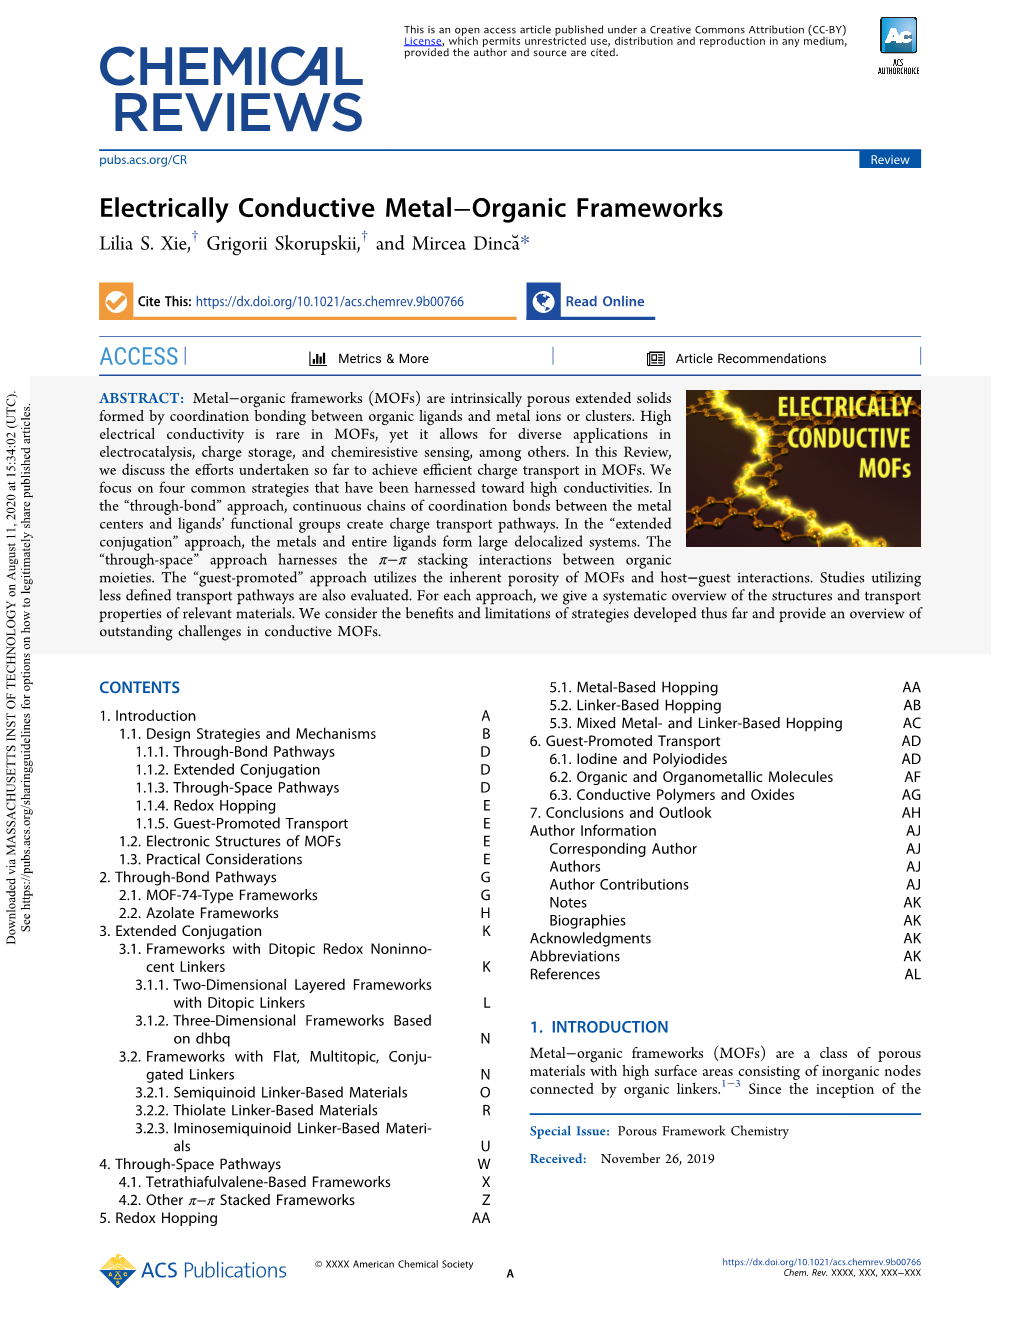 Electrically Conductive Metal−Organic Frameworks † † Lilia S